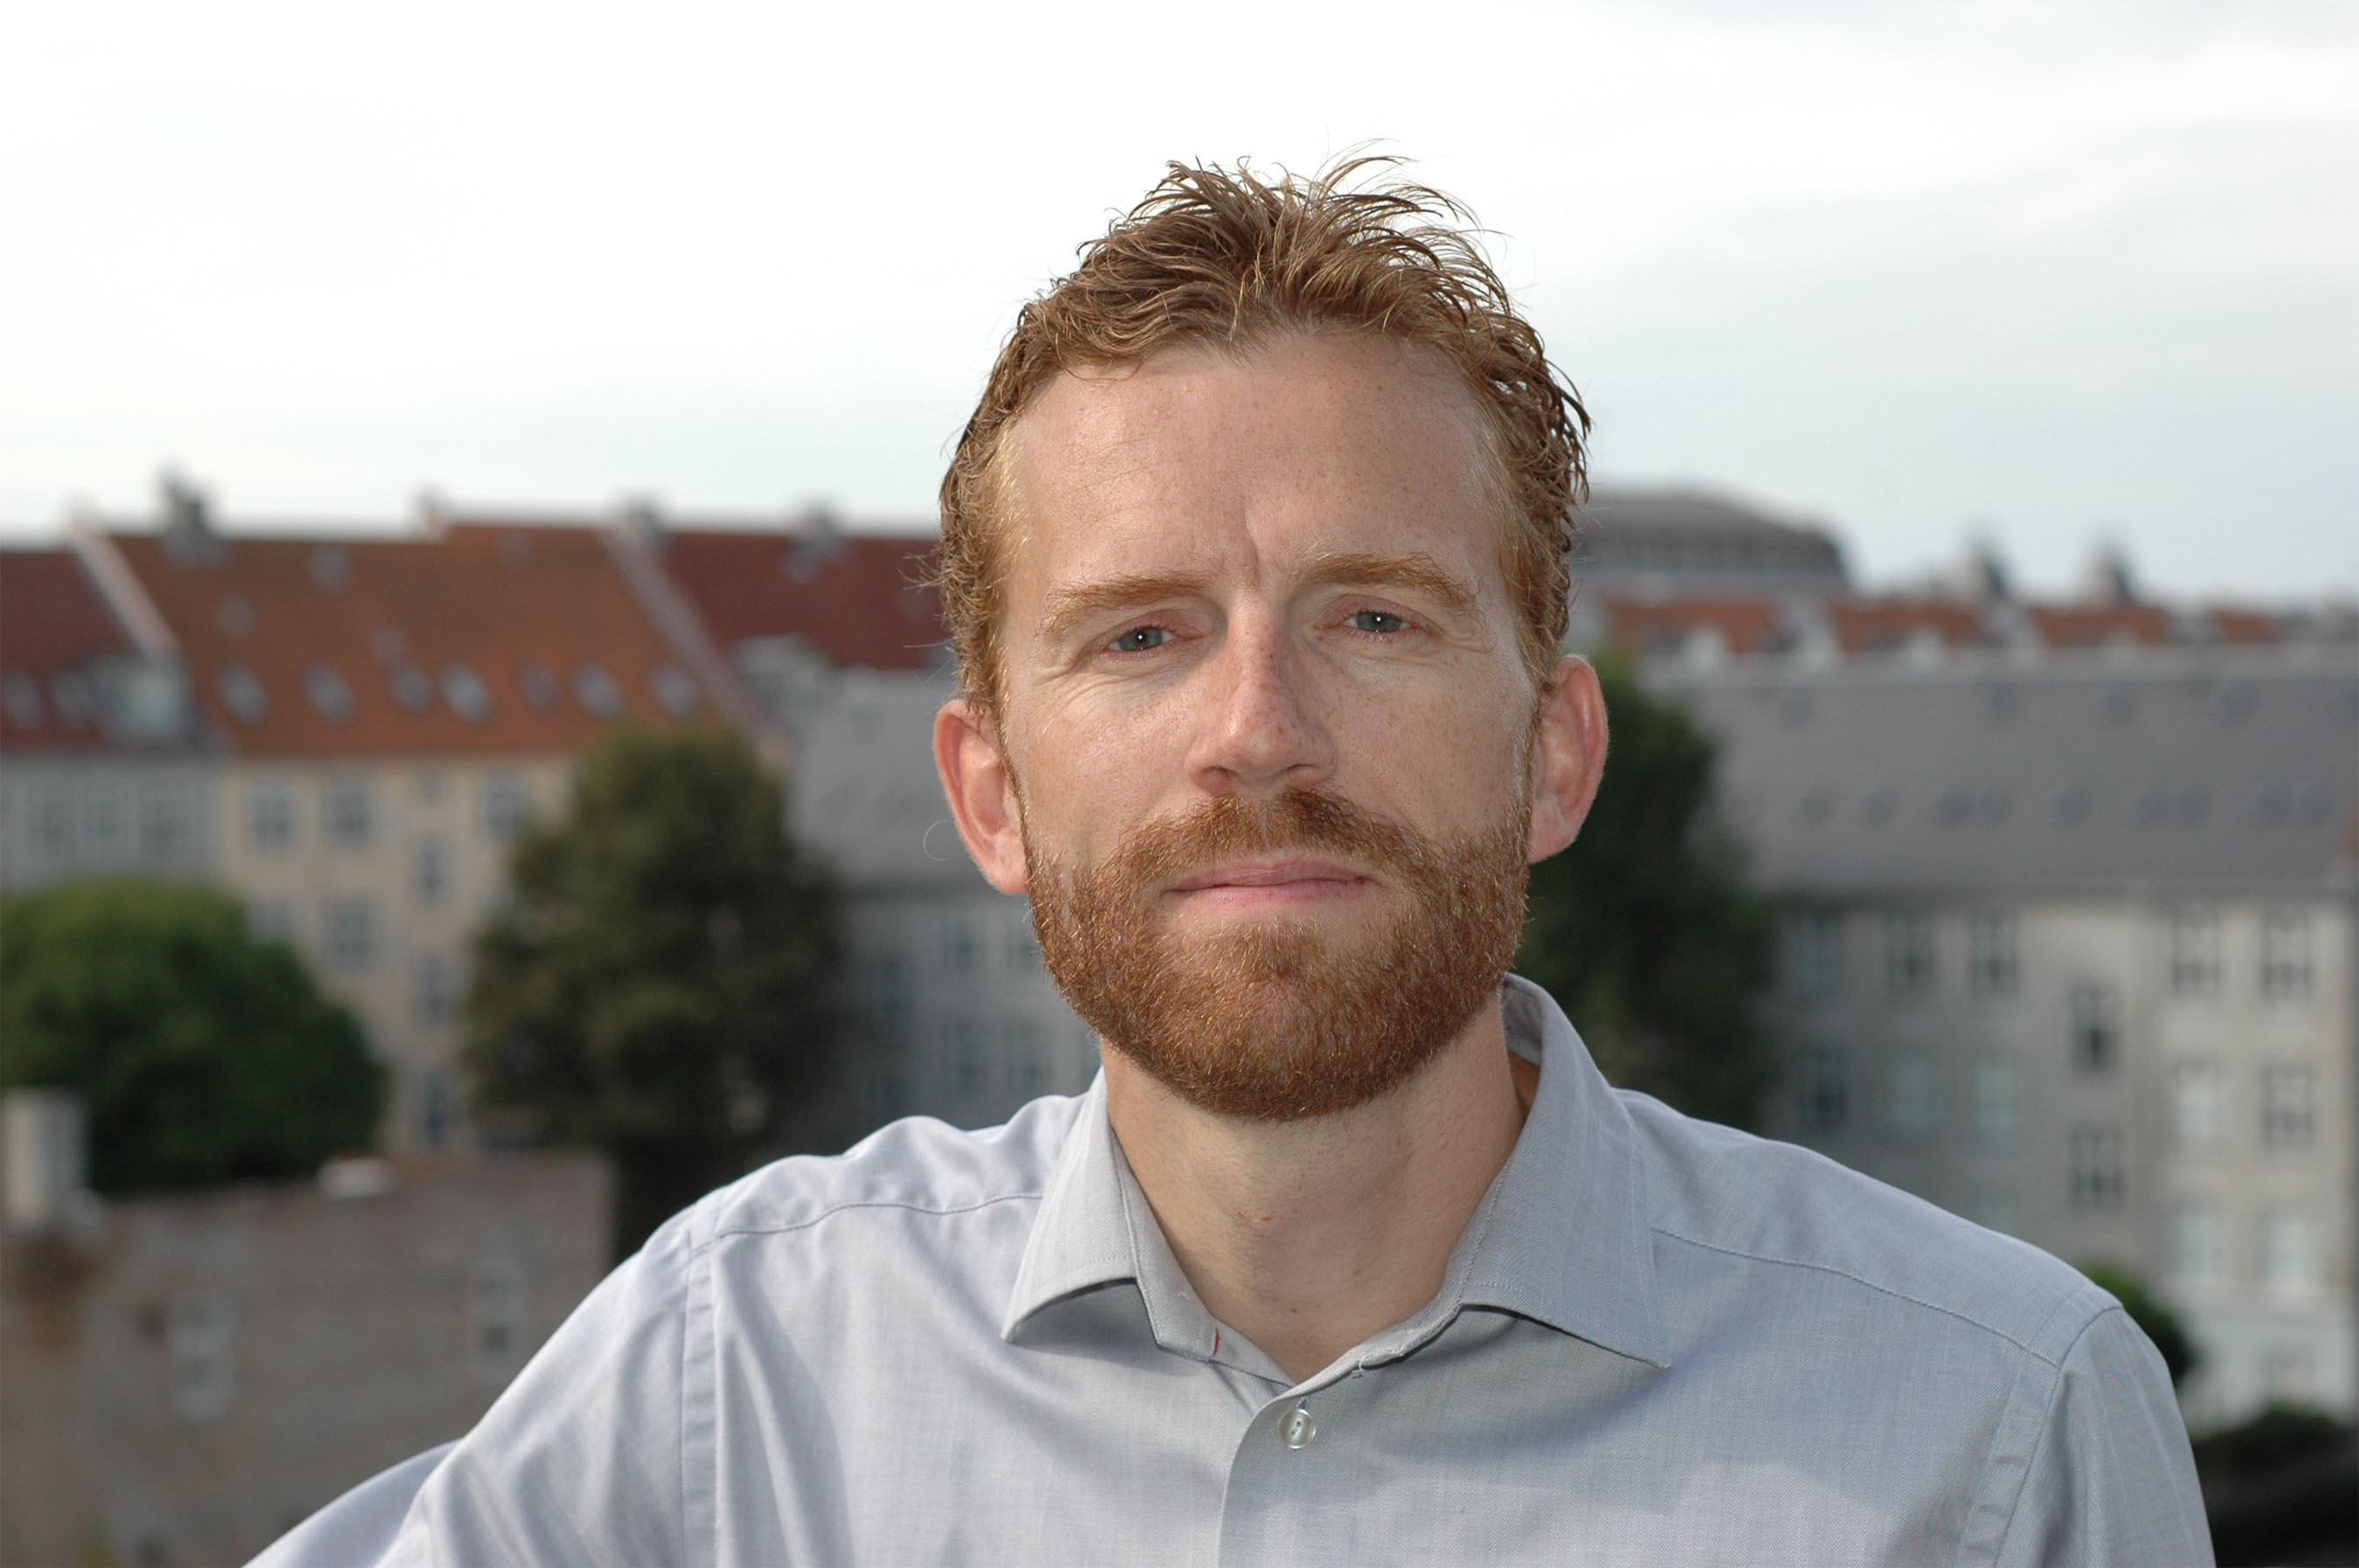 Soren Pommer, Gluu's co-founder and CEO. (PRNewsFoto/Gluu) (PRNewsFoto/GLUU)